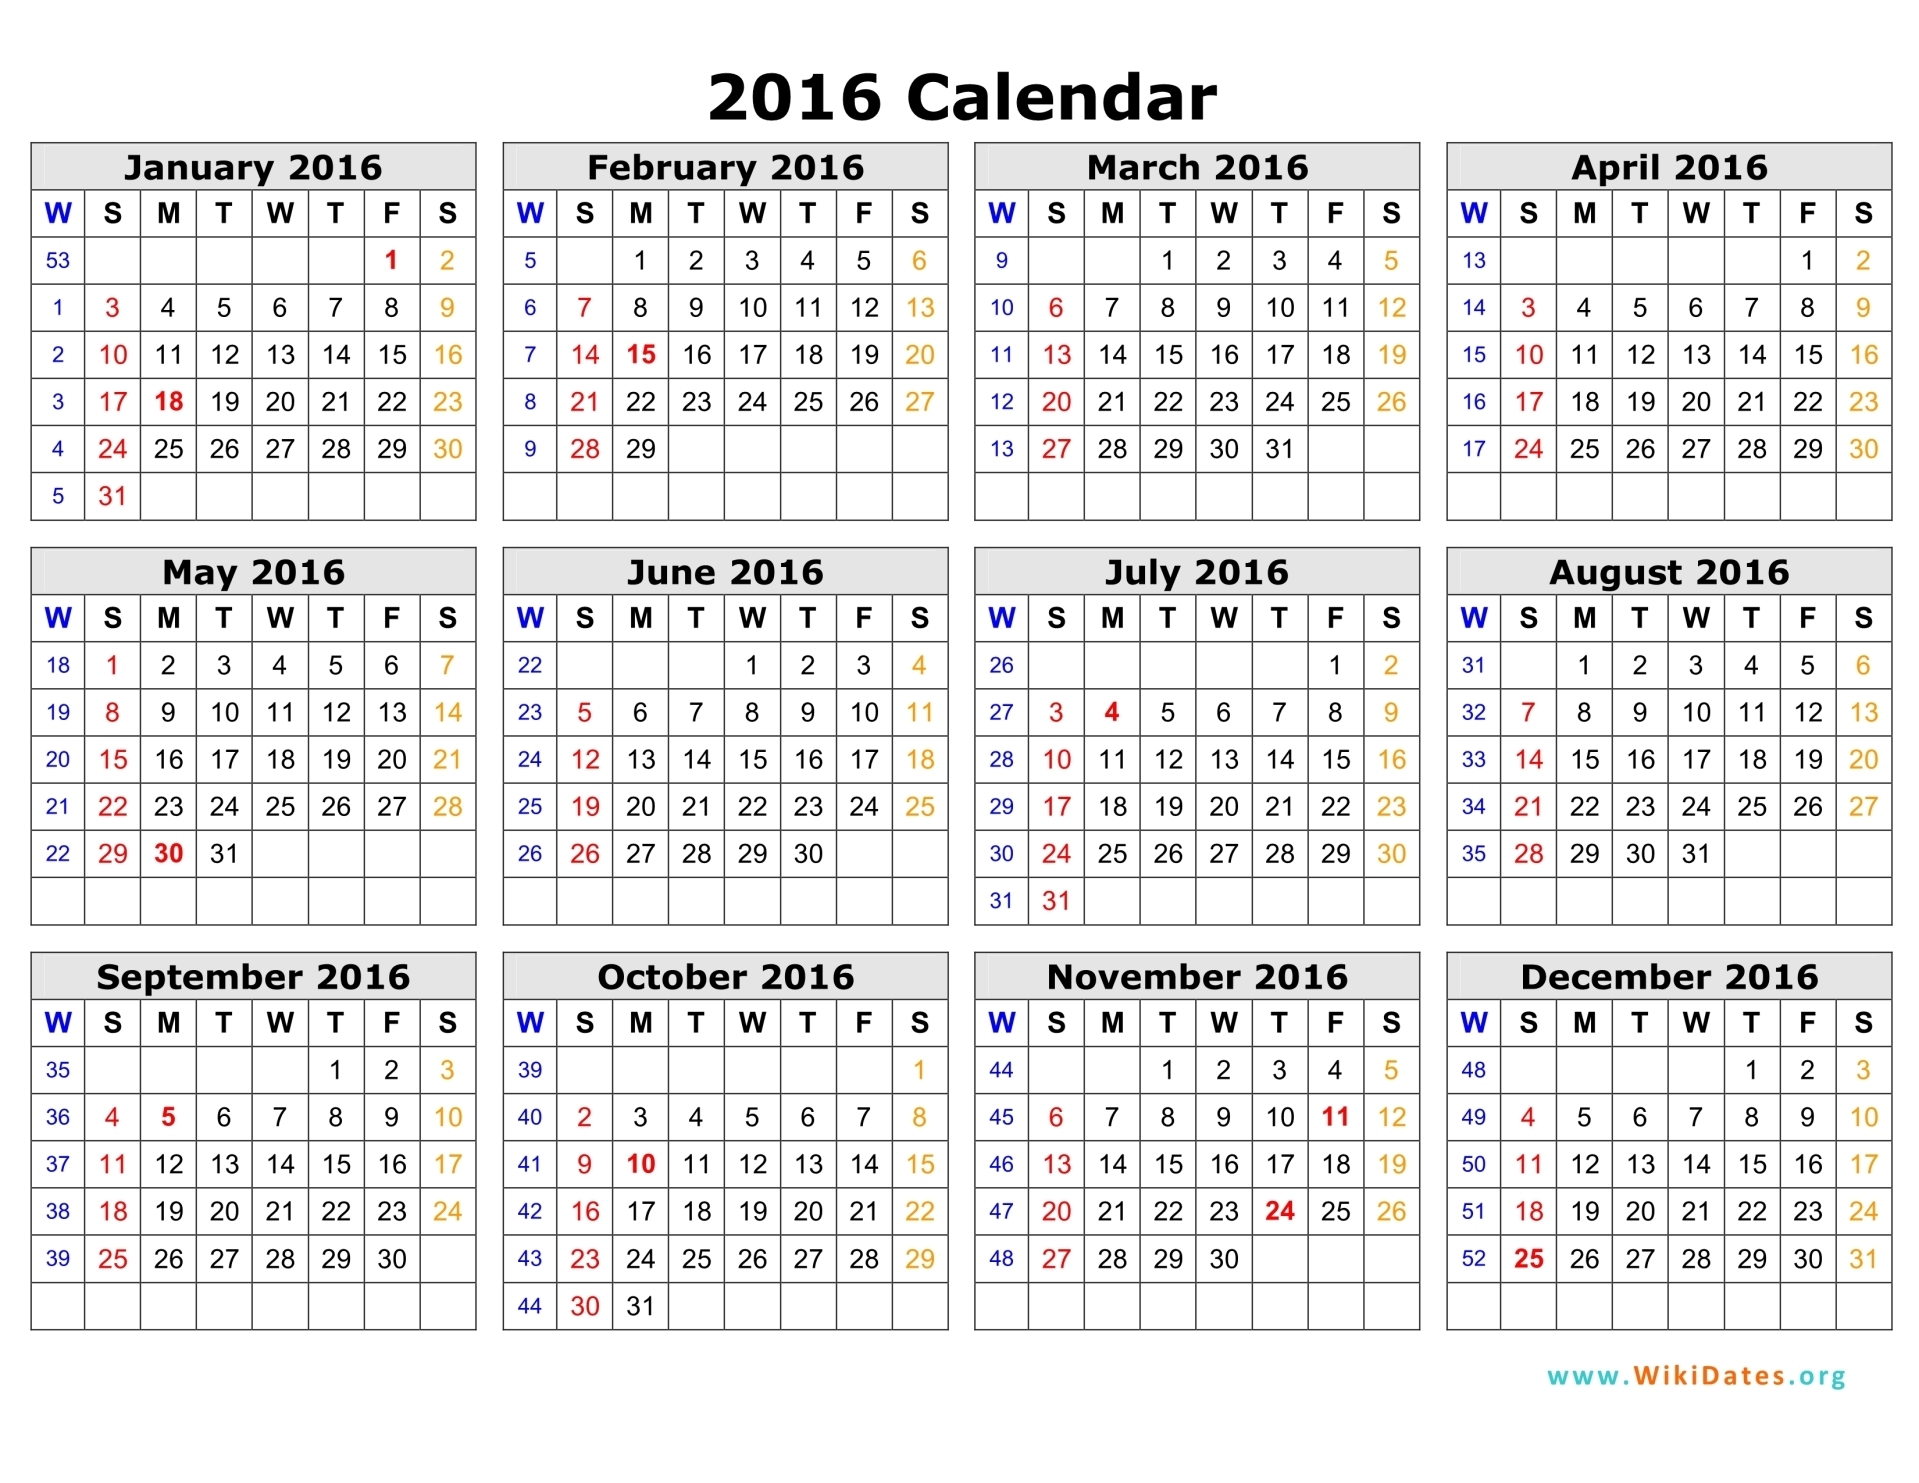 2016-calendar-wikidates